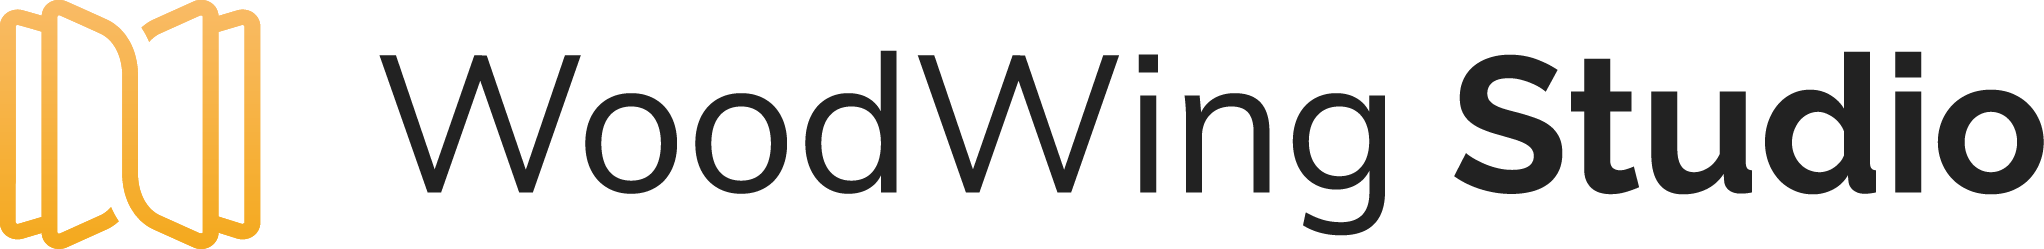 wws製品ロゴ